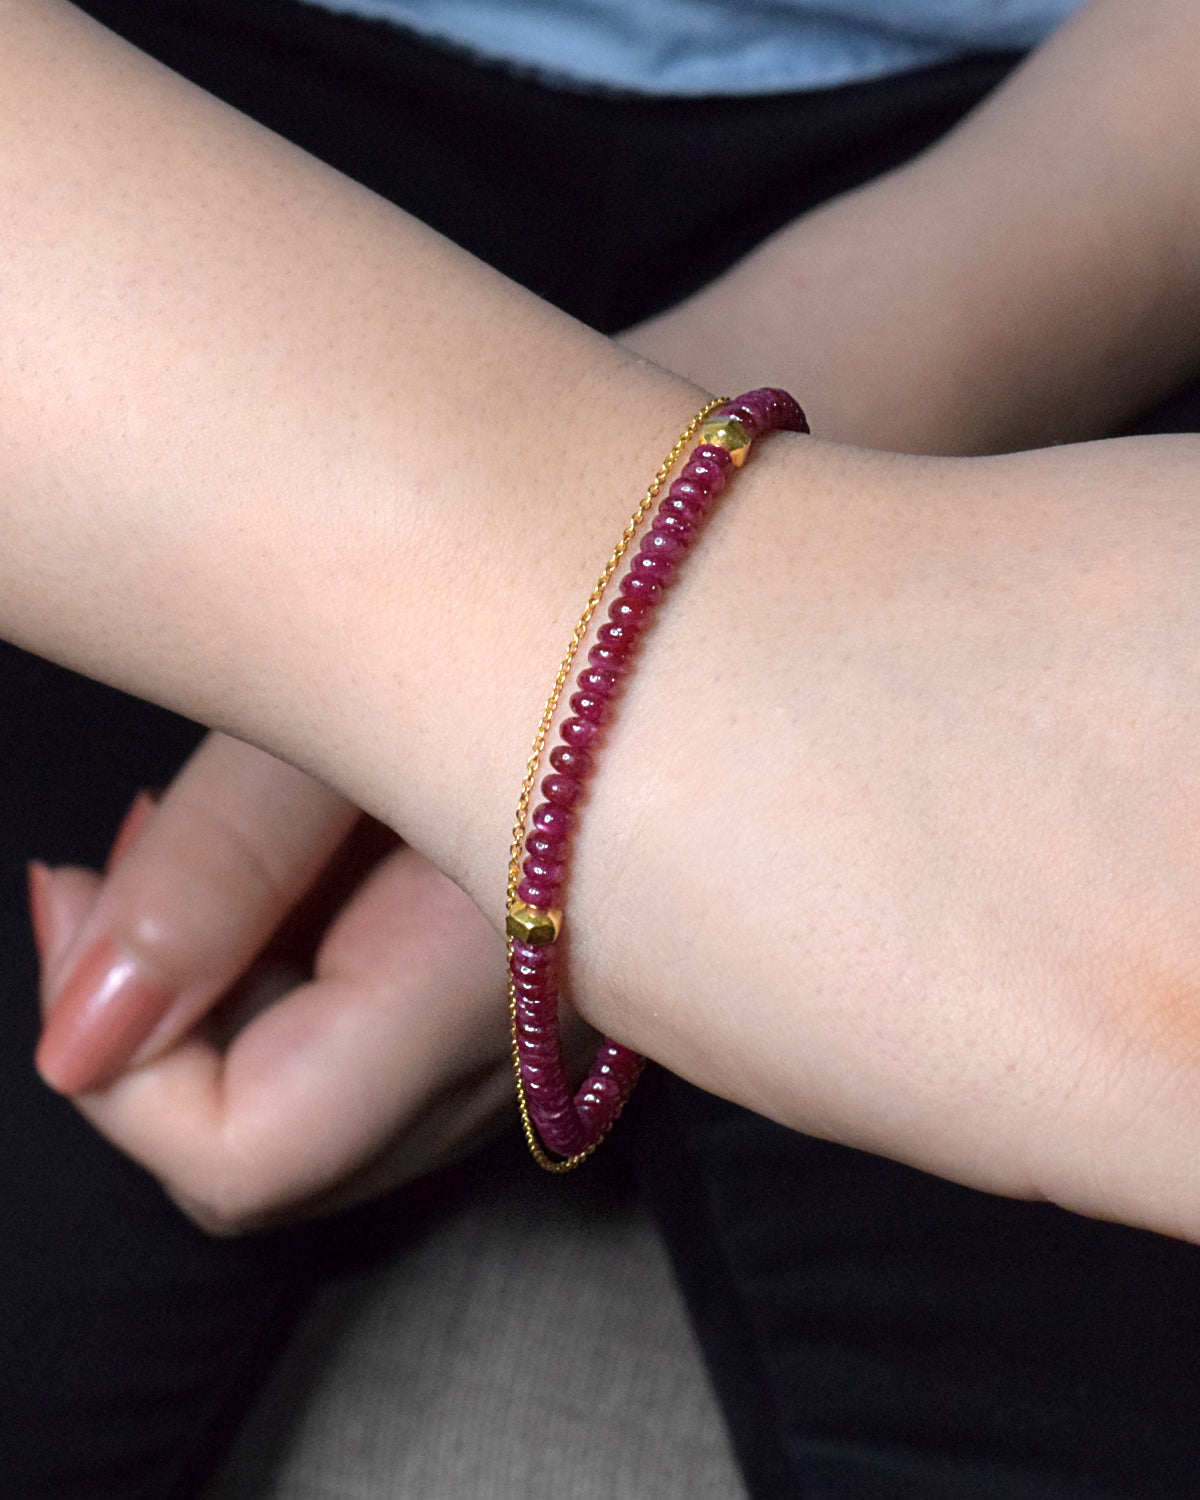 DIY Ruby Jewelry | Simple Bracelet Idea - YouTube